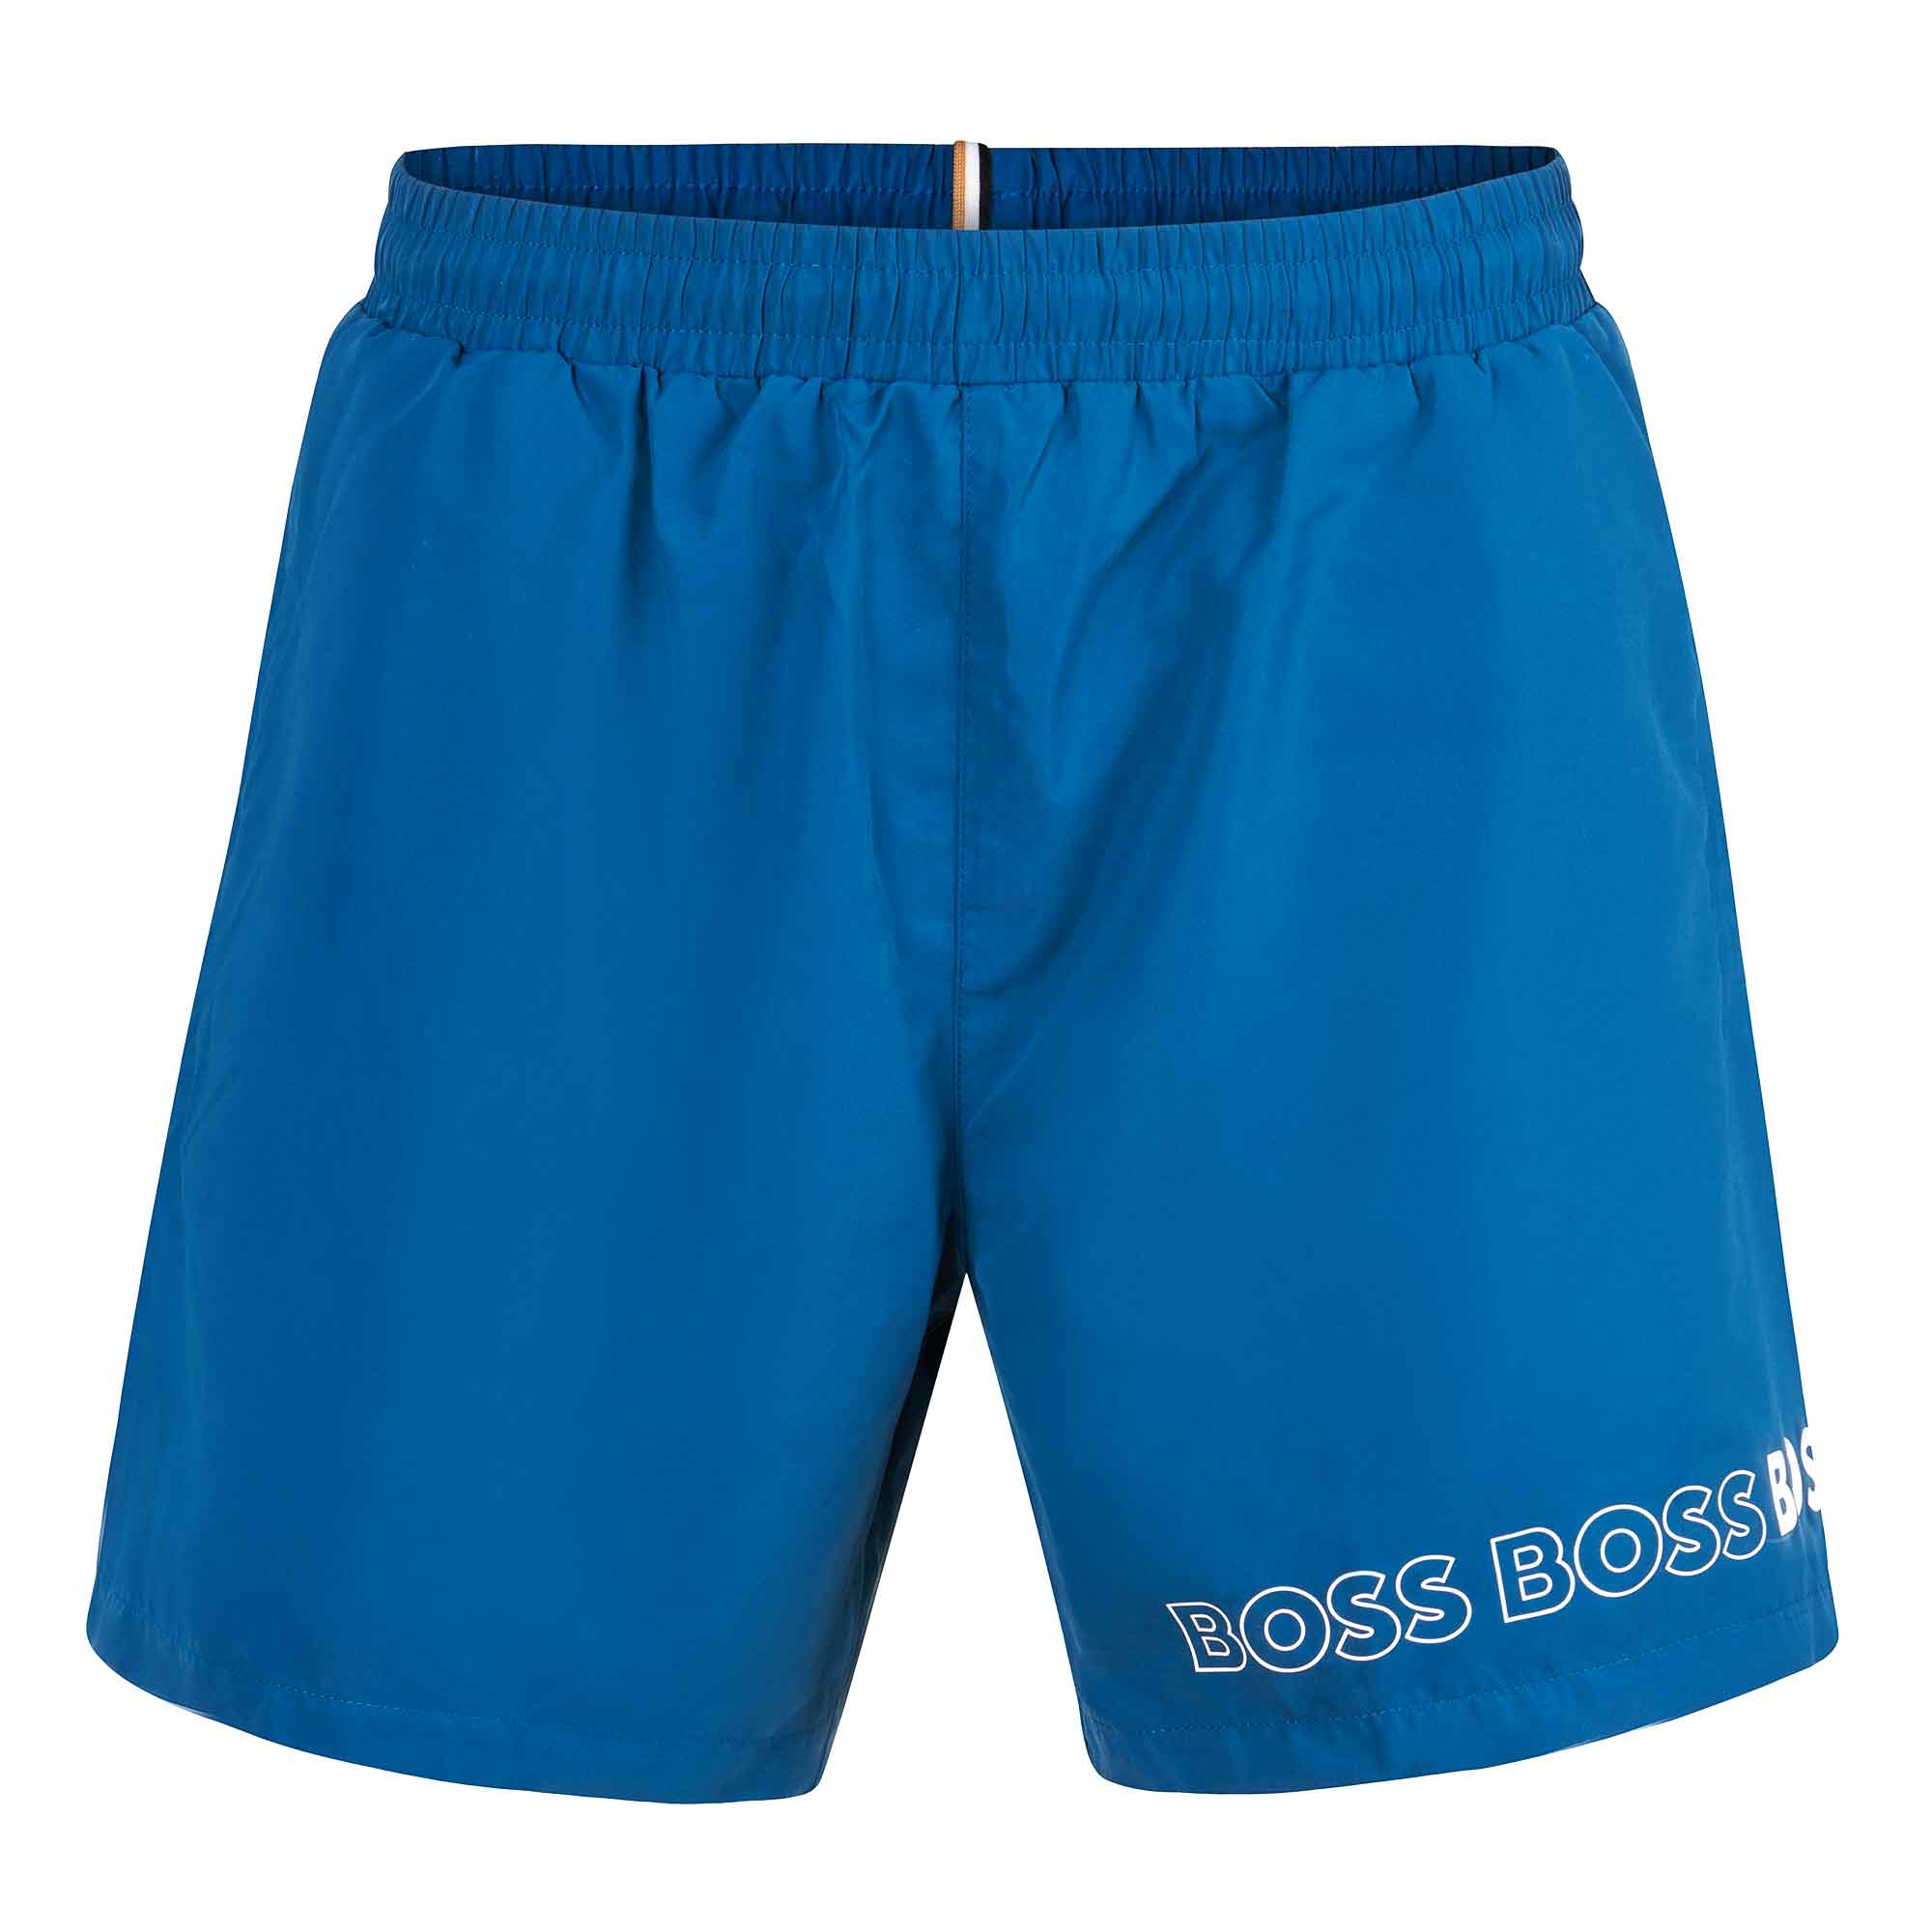 HUGO BOSS Swim Shorts with Repeat Logo - Medium Blue - Pennyroyal Sports